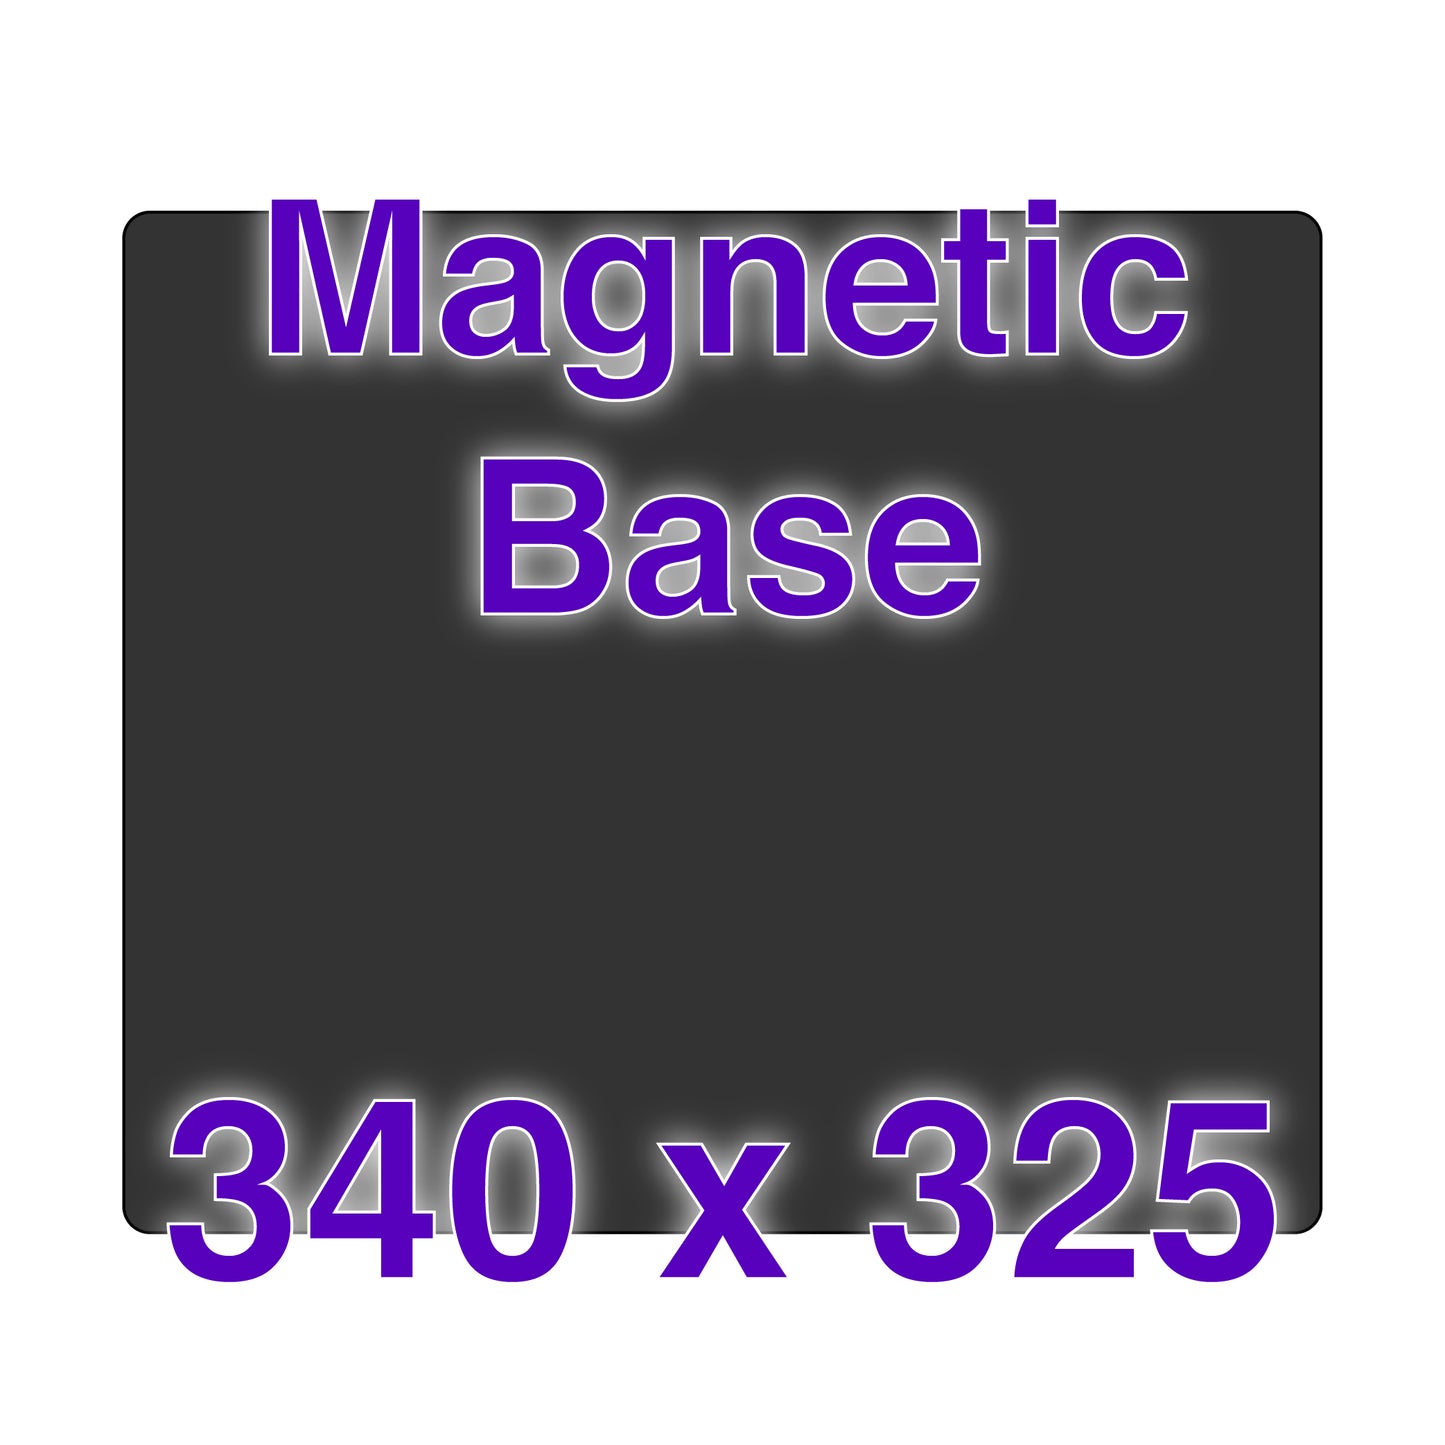 Magnetic Base - 340 x 325